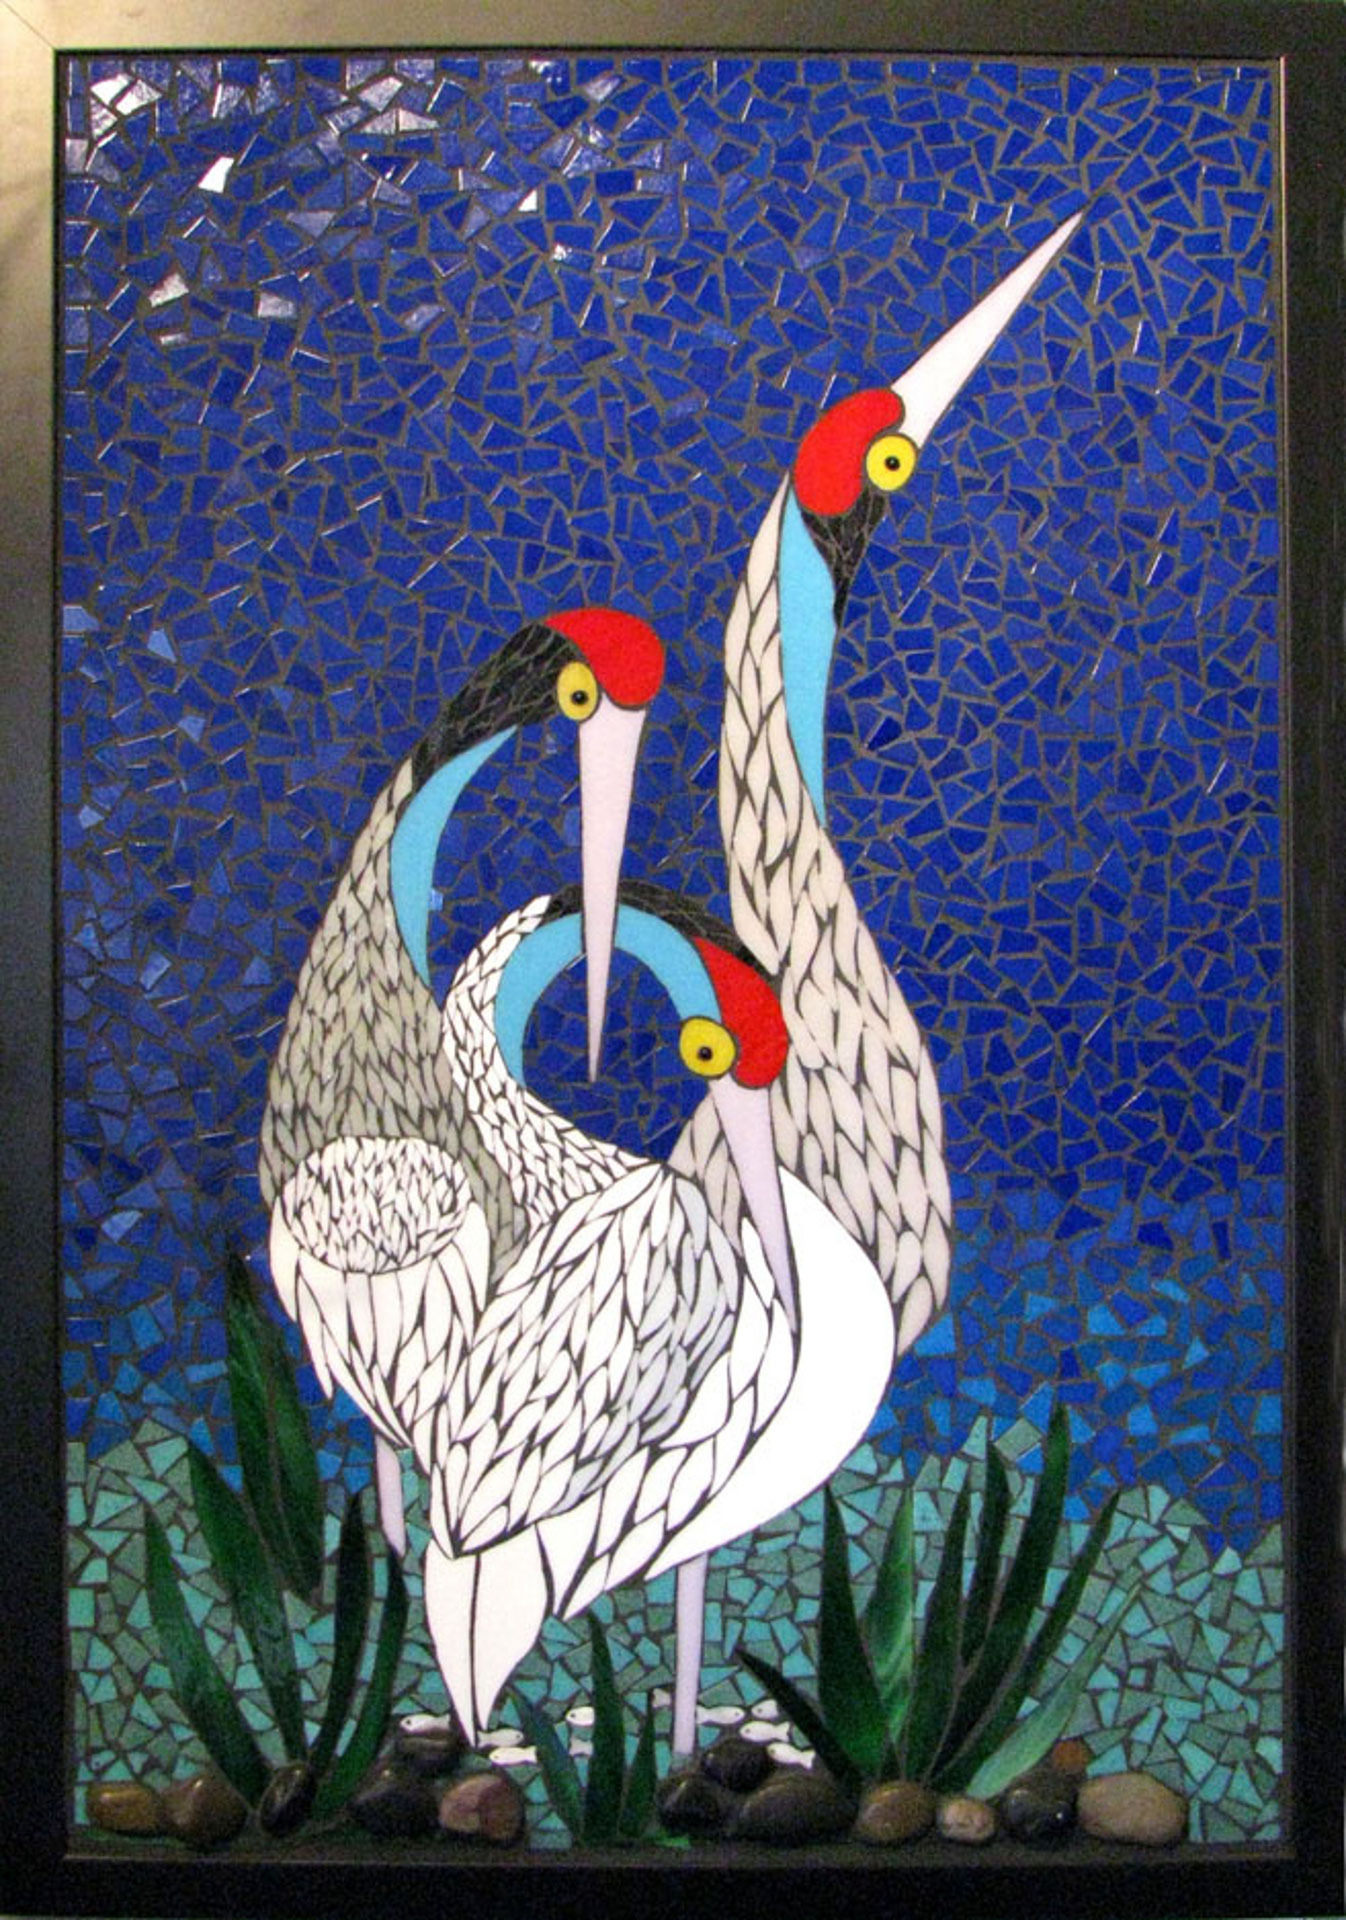 Cranes Mosaic By Marlies Wandres | absolutearts.com